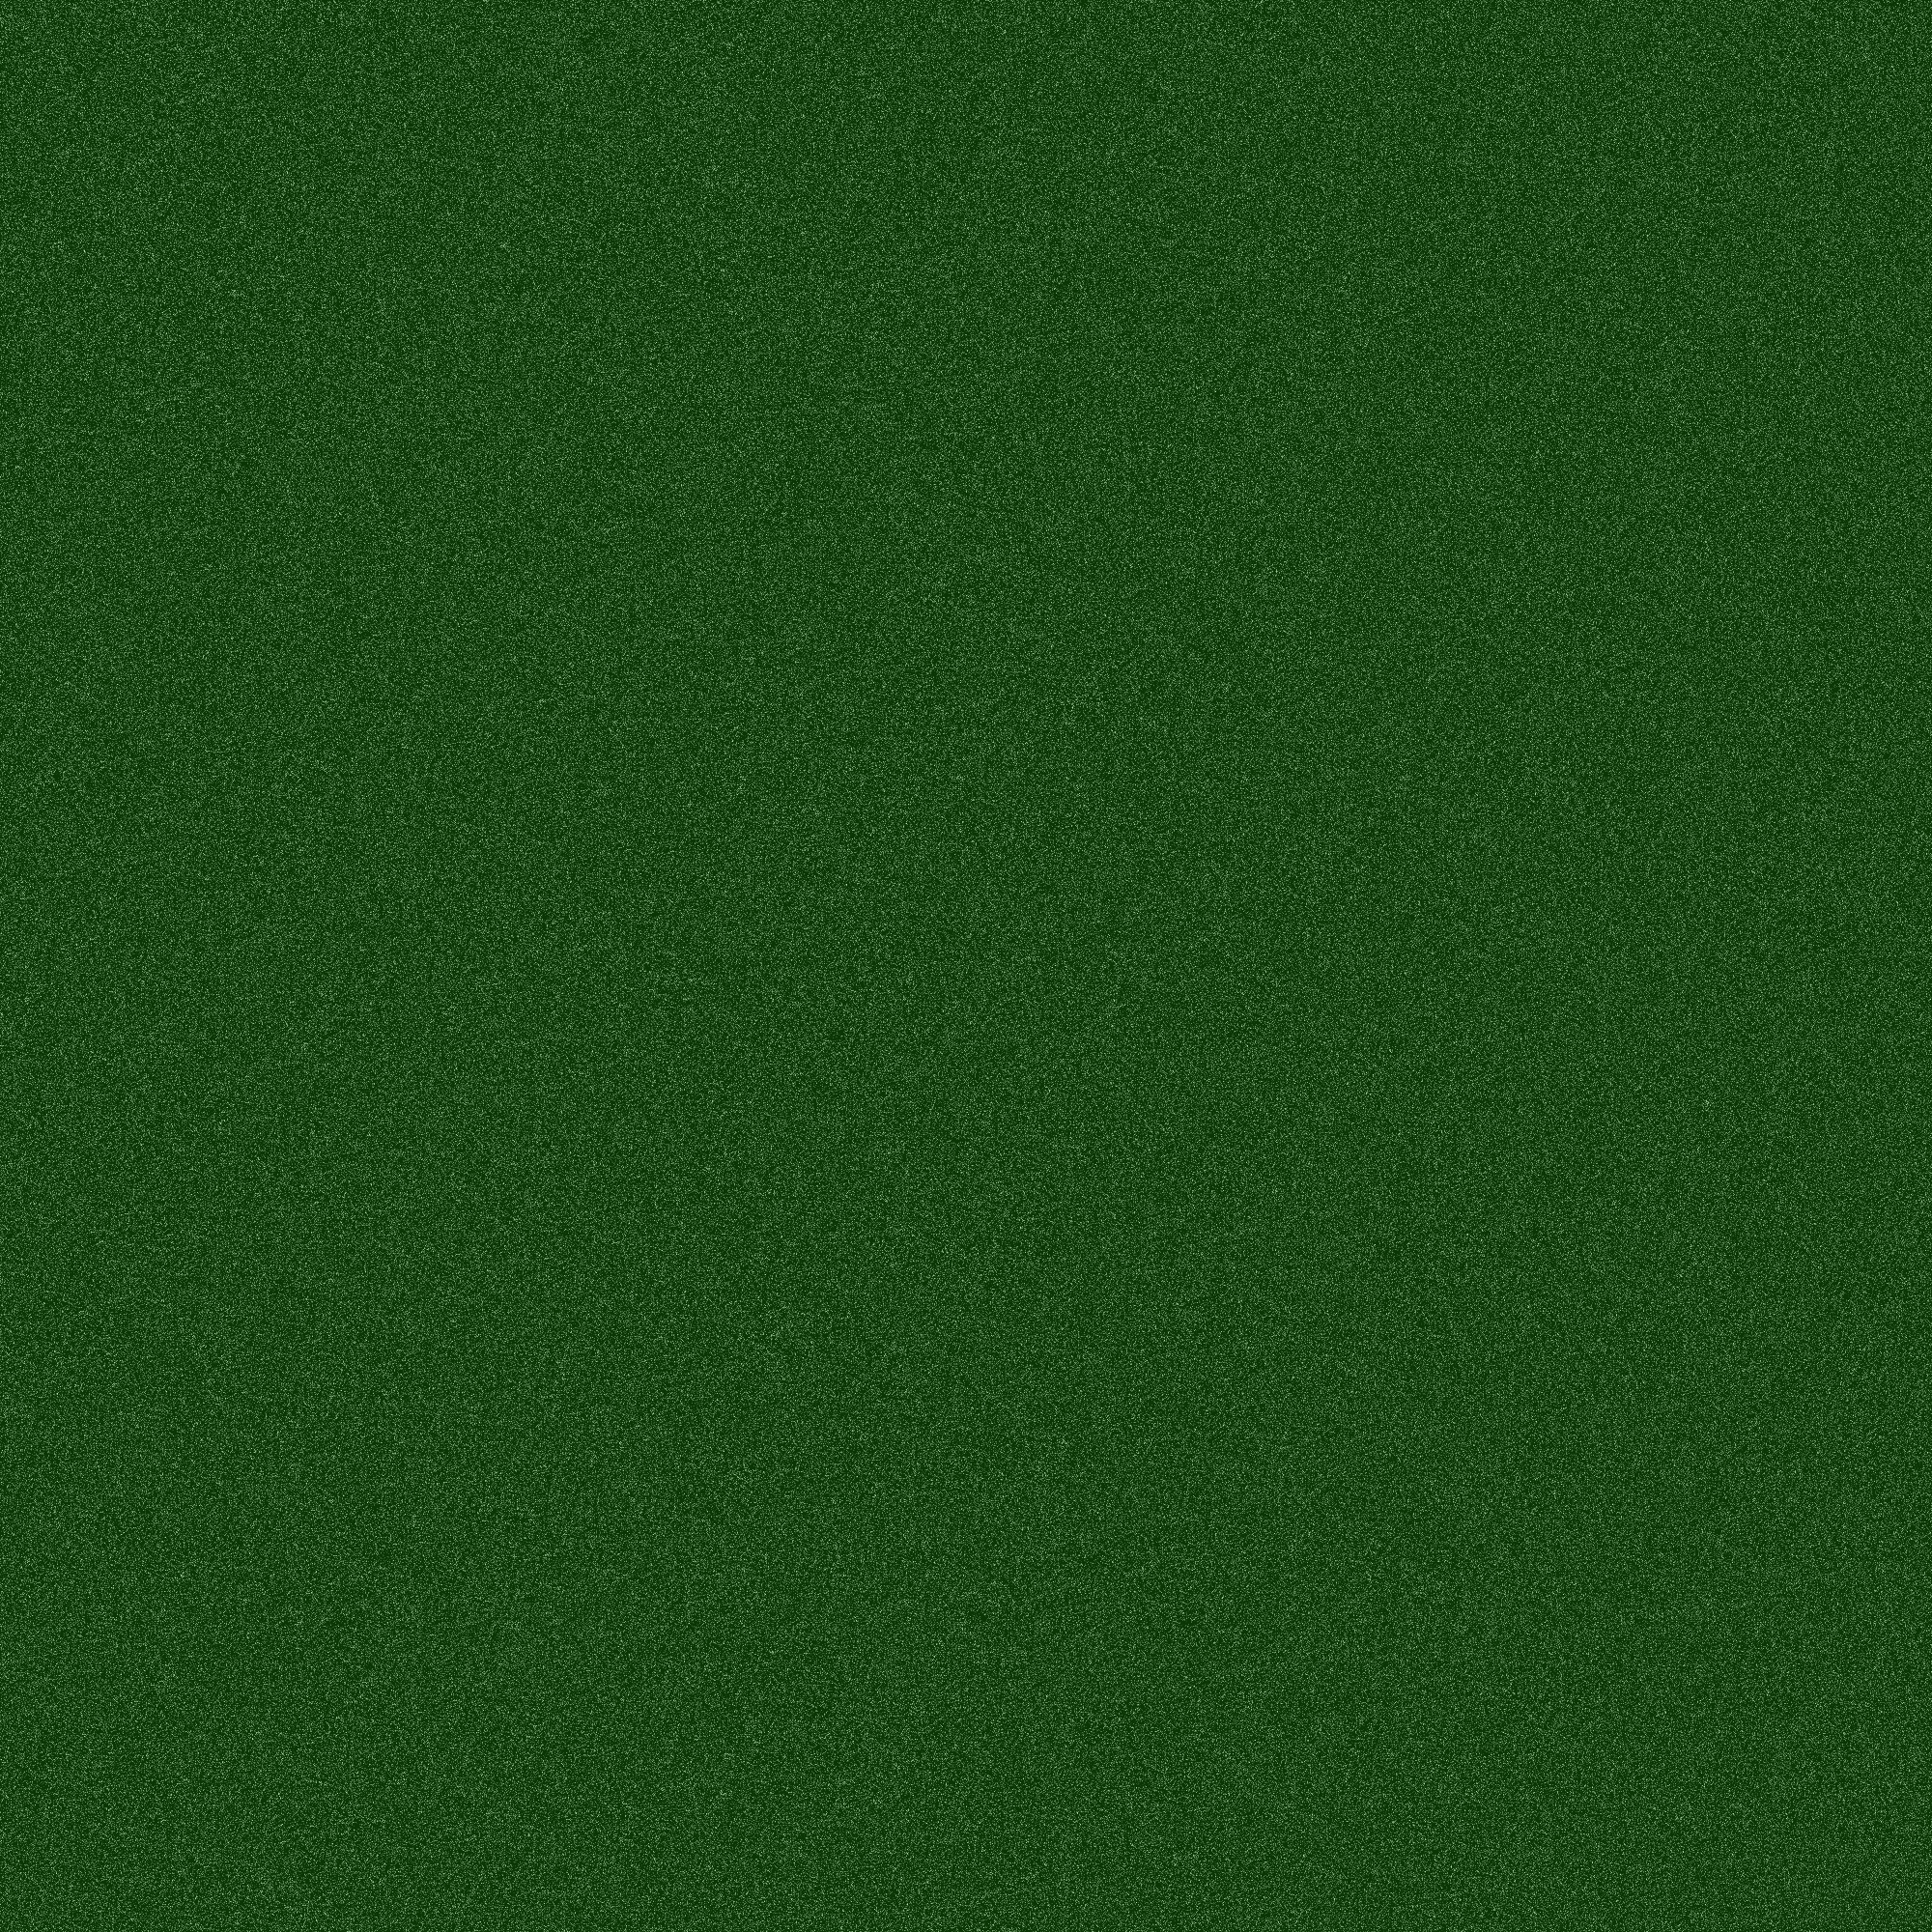 Alfa Img Showing Gt Metallic Dark Green Background